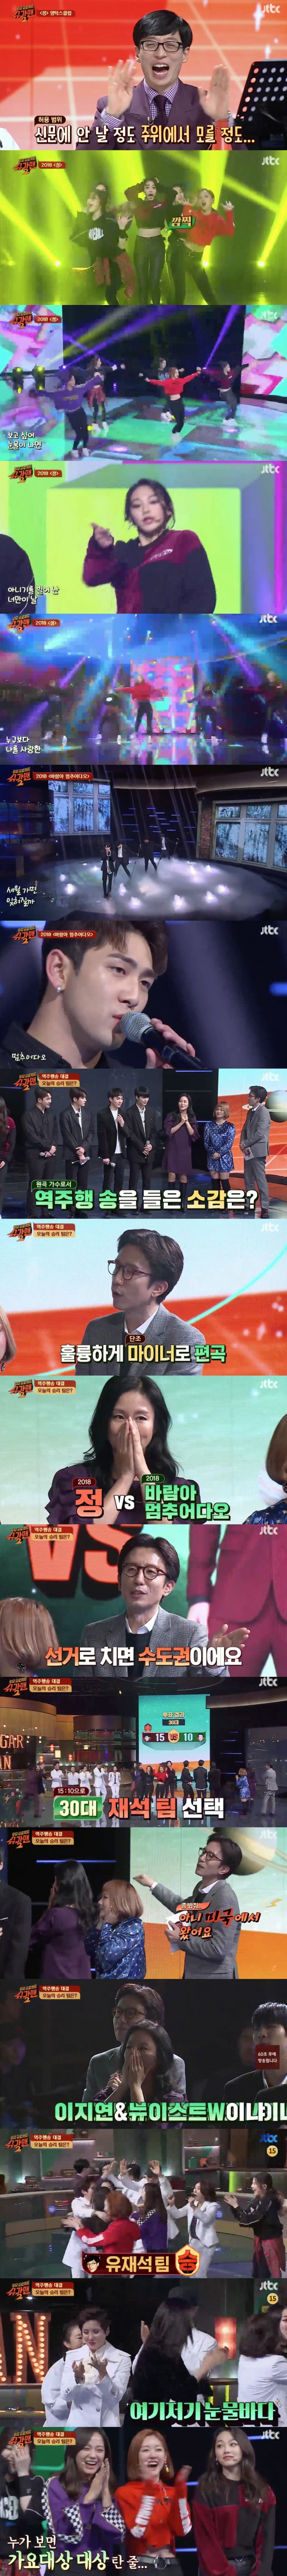 JTBC ‘슈가맨2’ 방송 캡쳐 